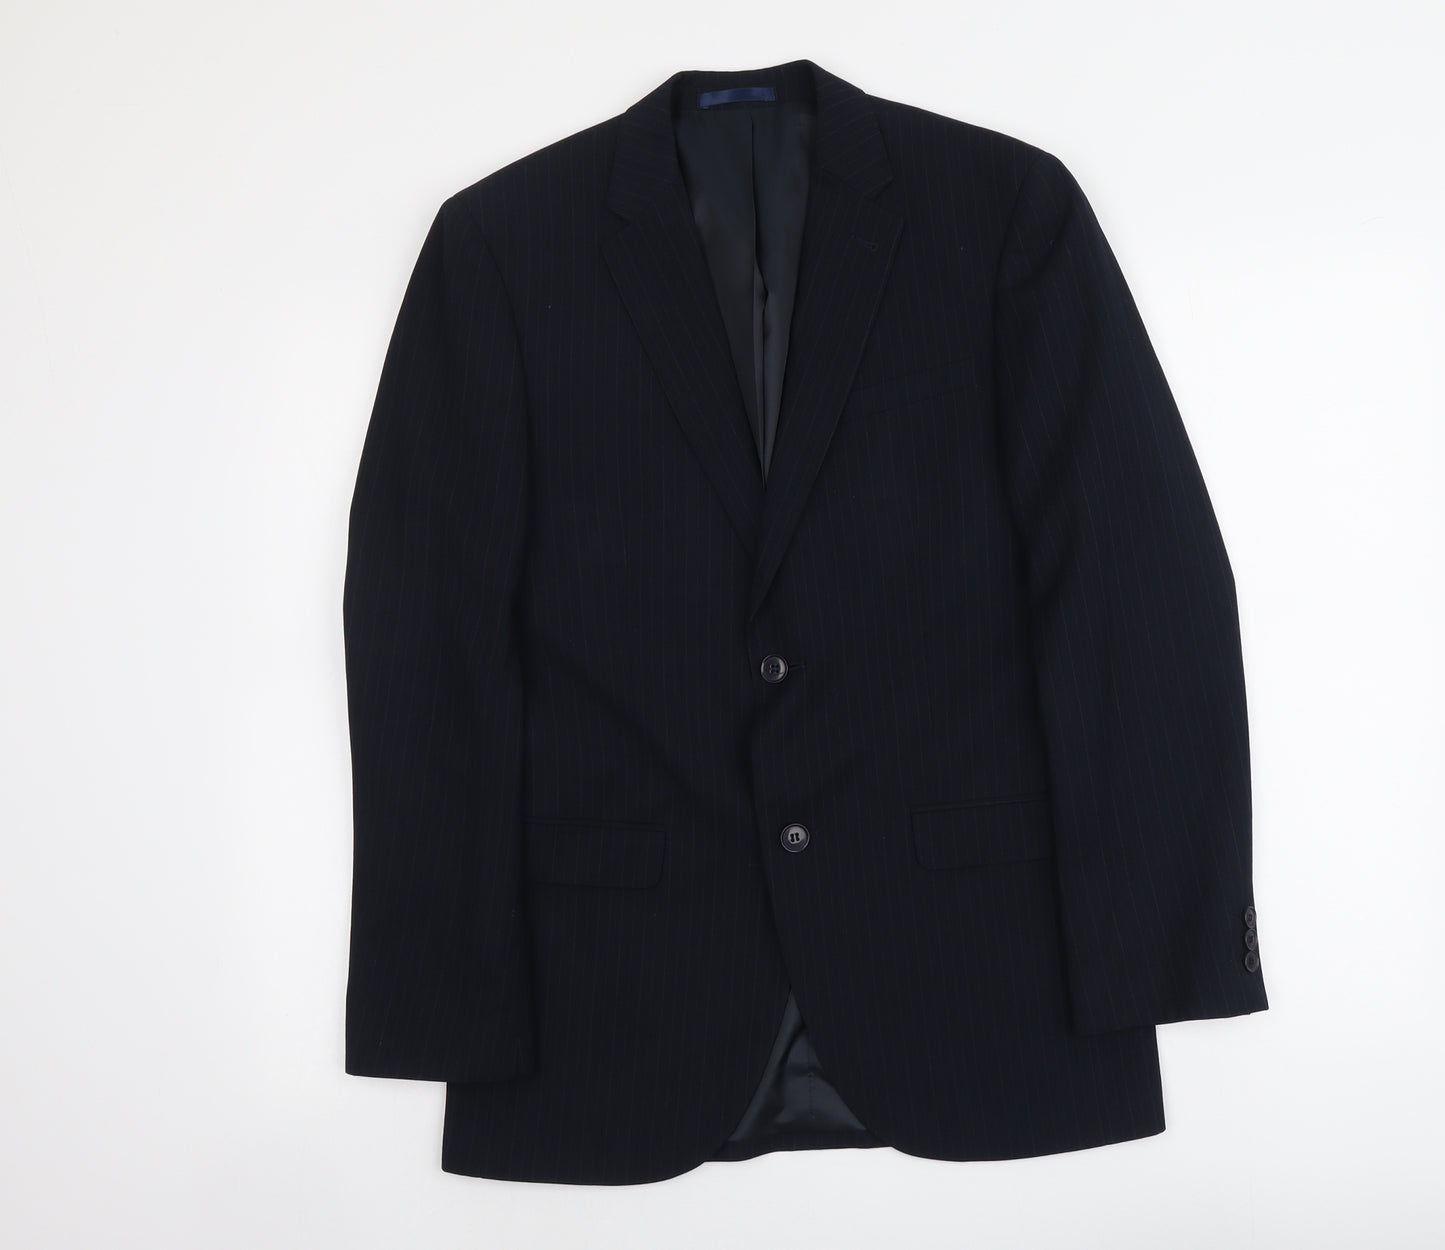 B&W Mens Blue Polyester Jacket Suit Jacket Size S Regular